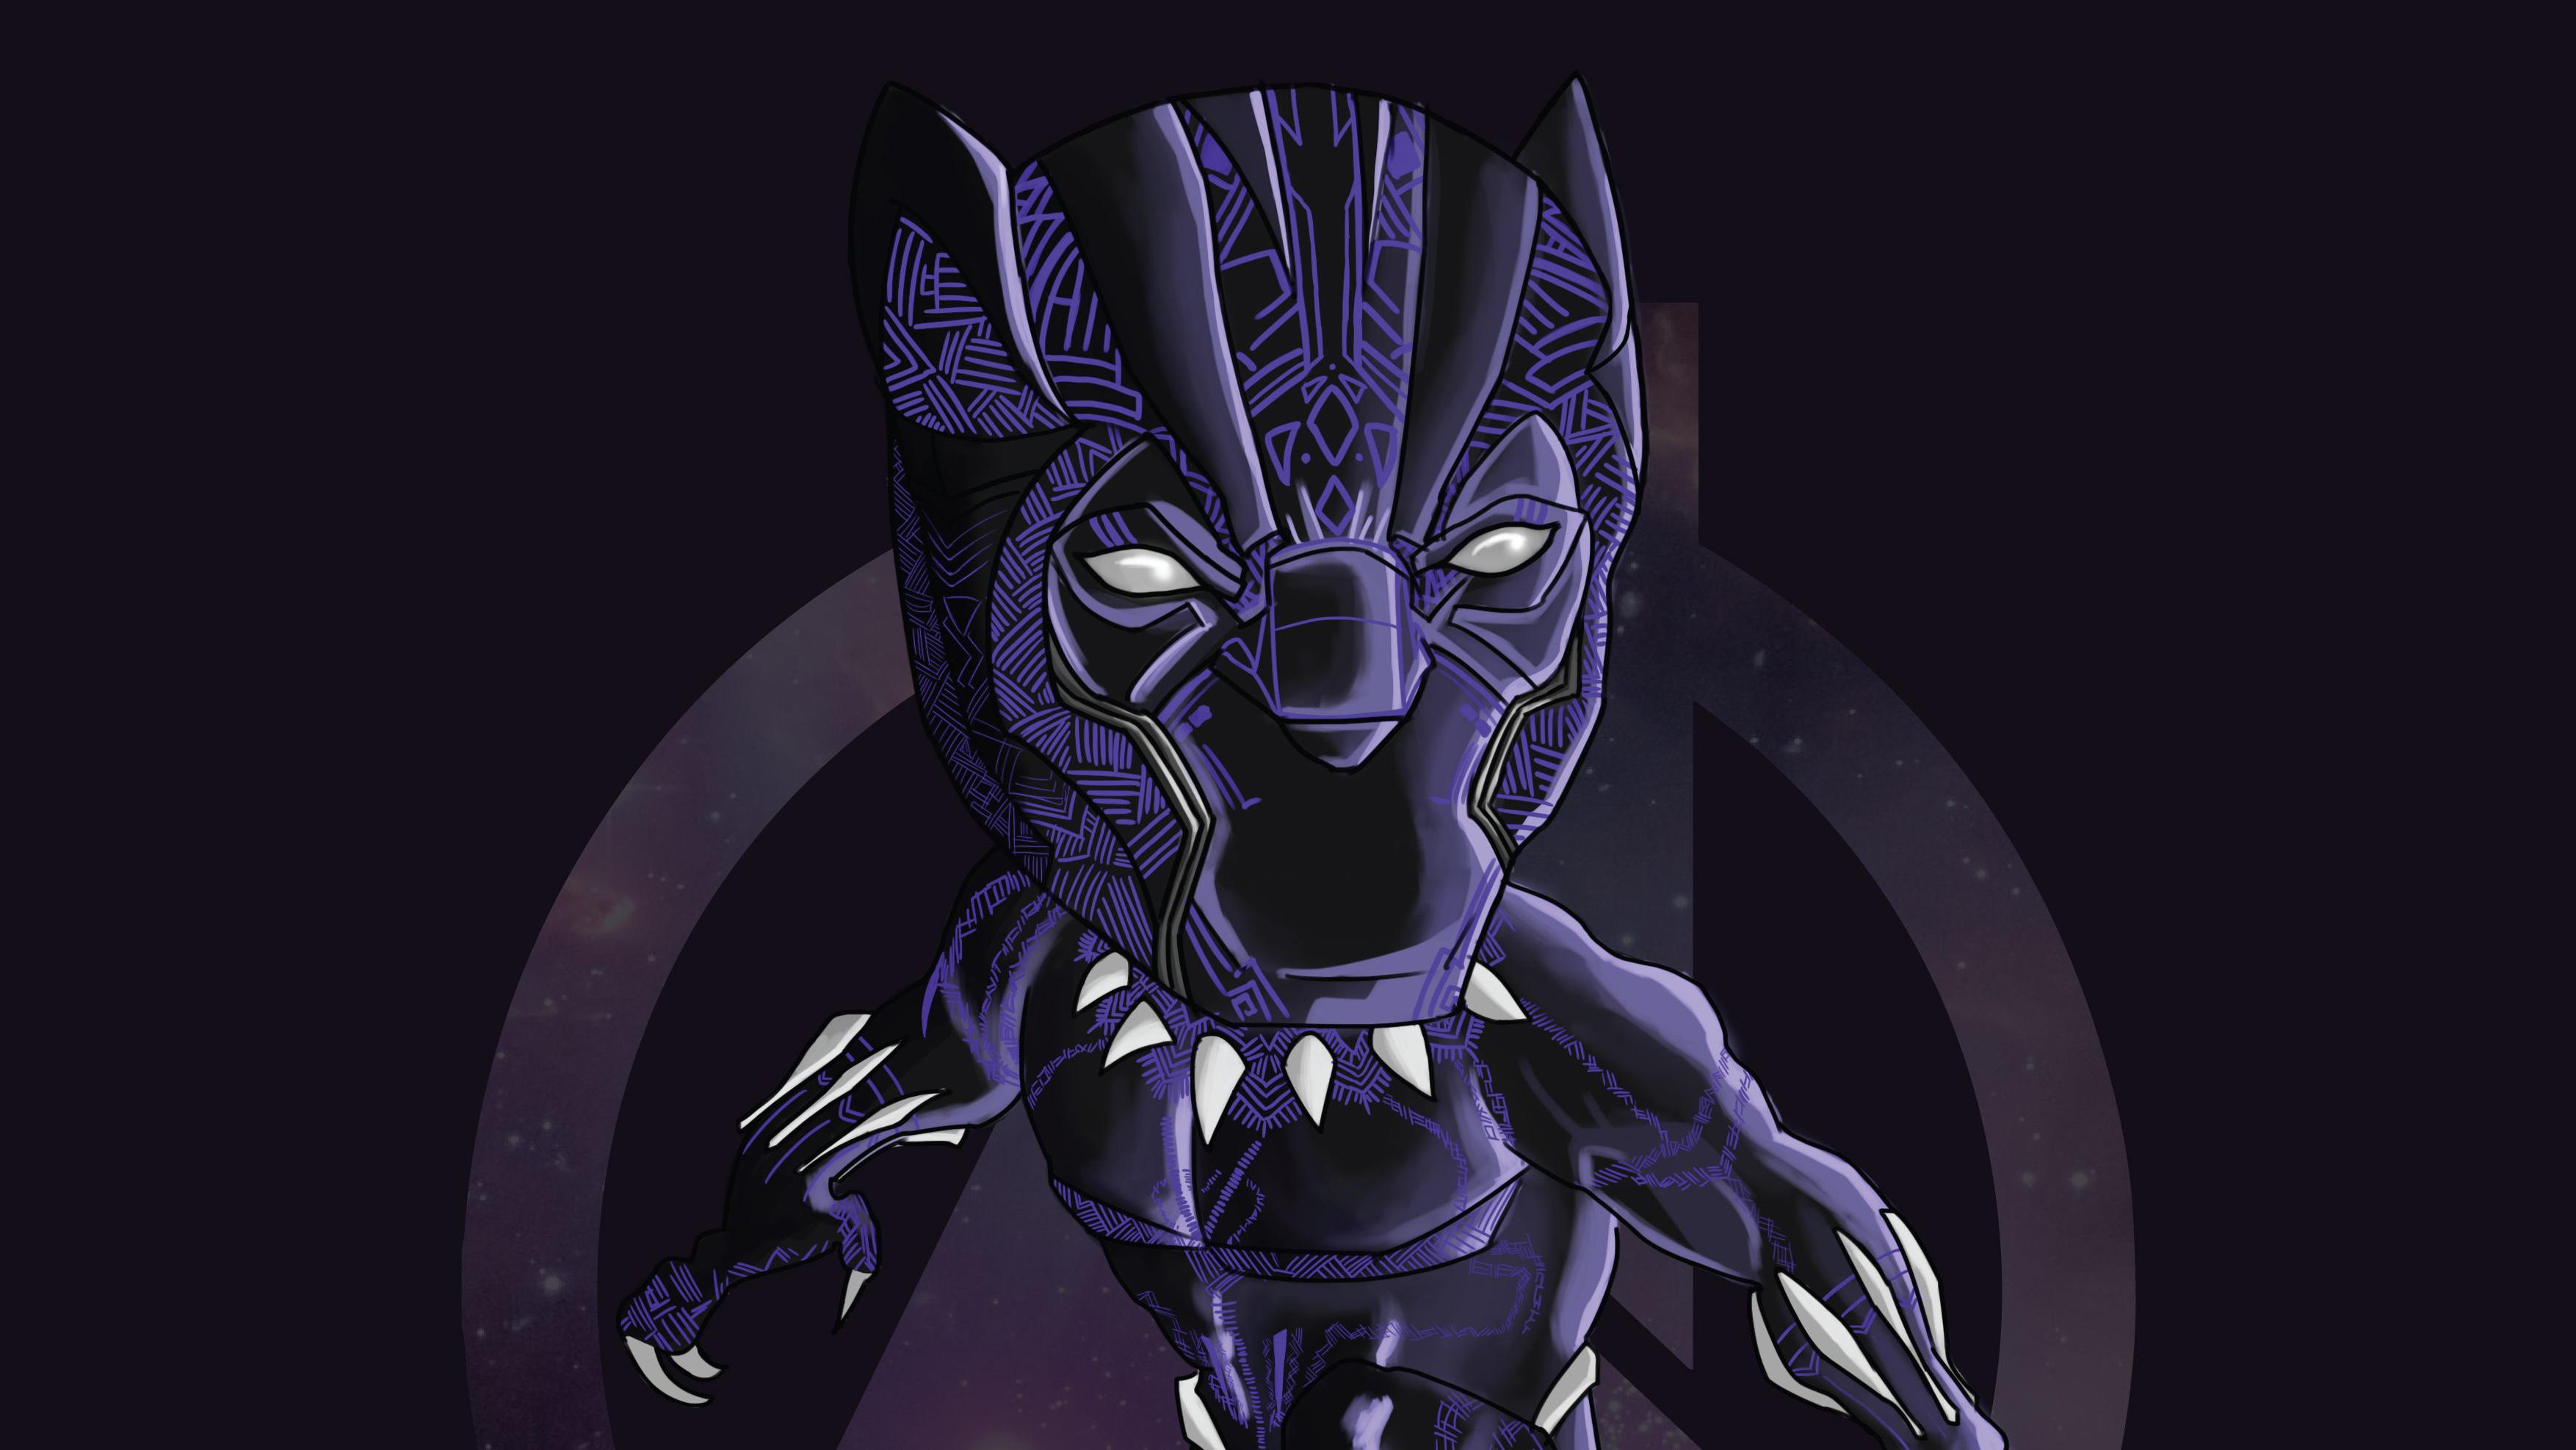 Black Panther Doodle Art, HD Superheroes, 4k Wallpaper